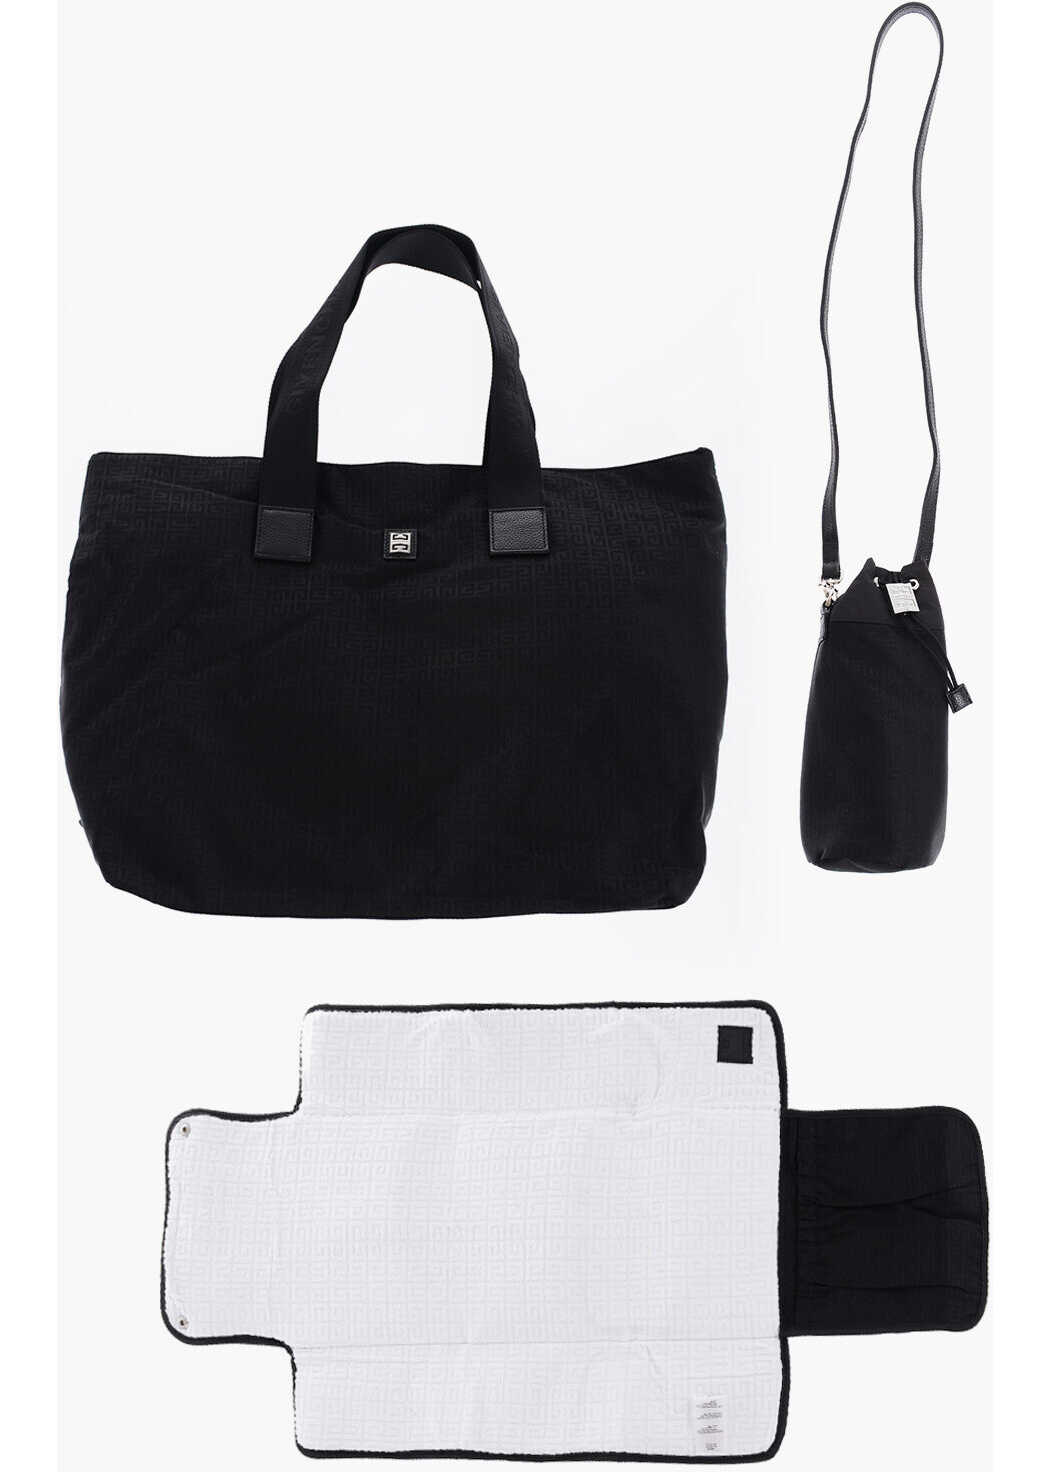 Givenchy Logoed Tote Changing Bag Black